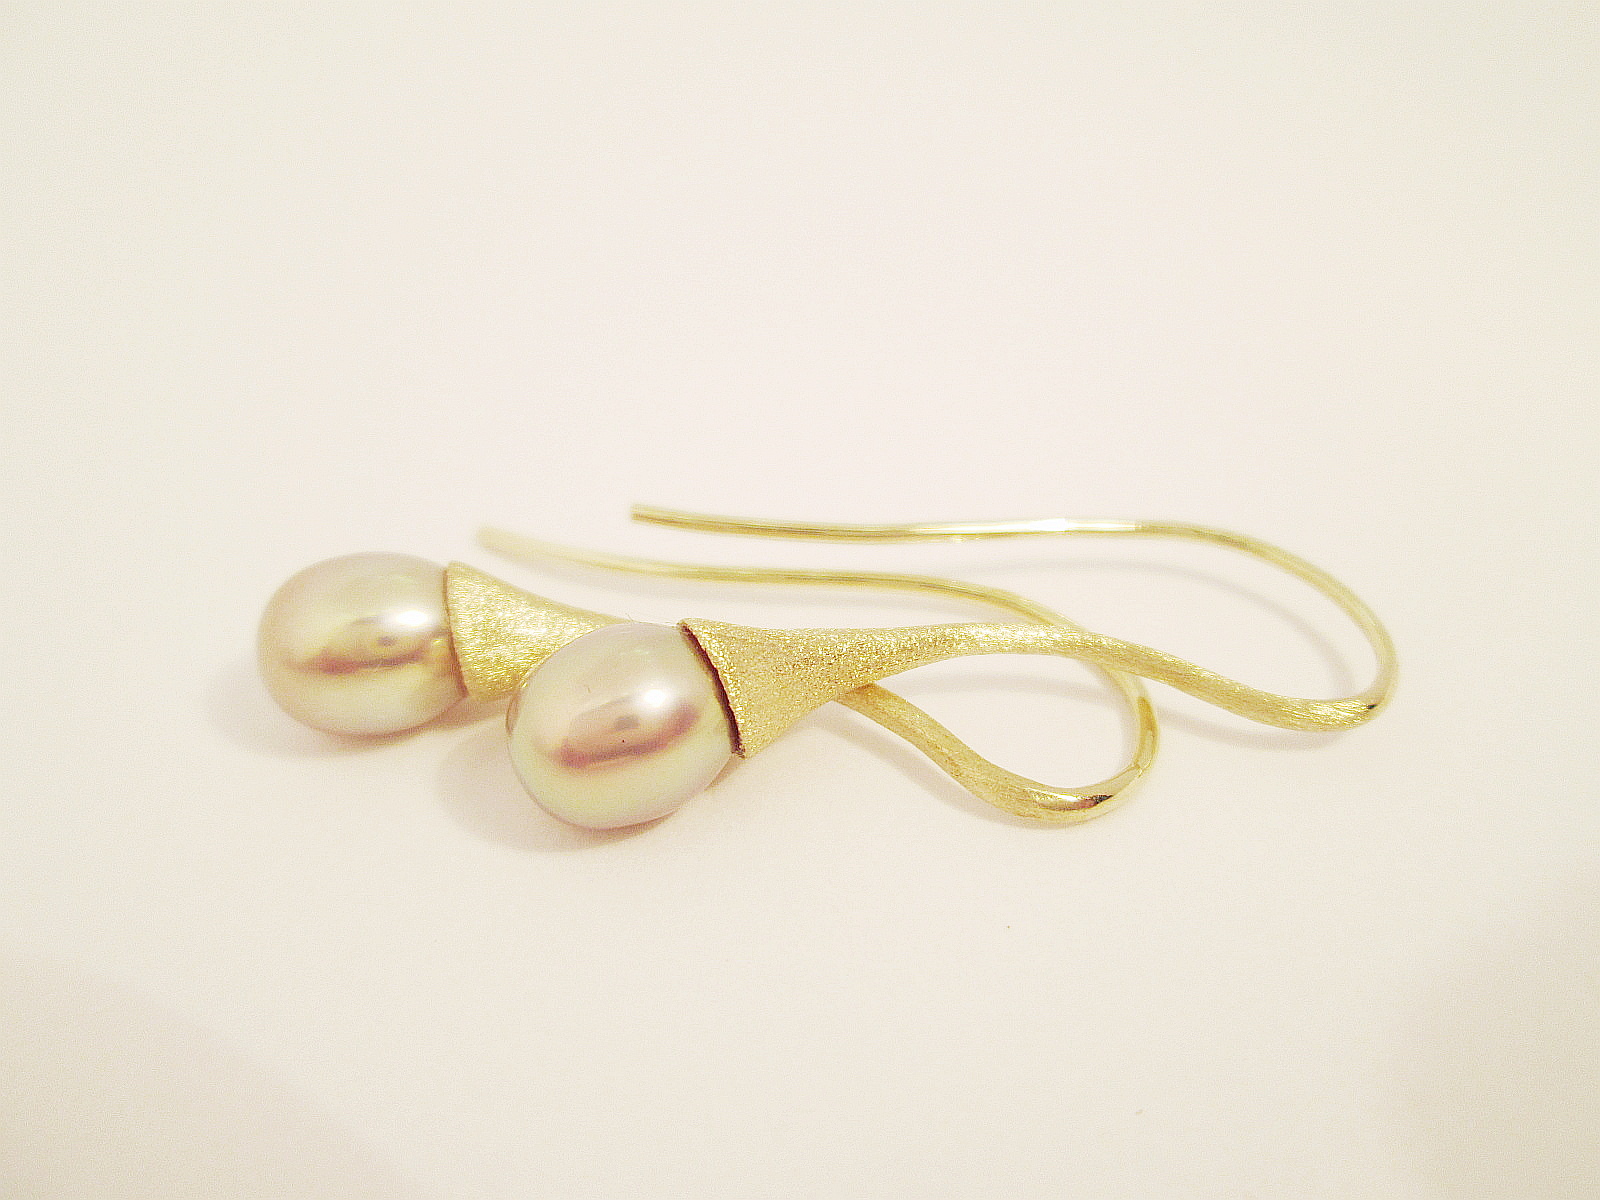  Náušnice&nbsp;ze žlutého matovaného zlata 585/1000&nbsp;s přírodní perlou o průměru 8 mm.  Cena: 9200,-Kč. 